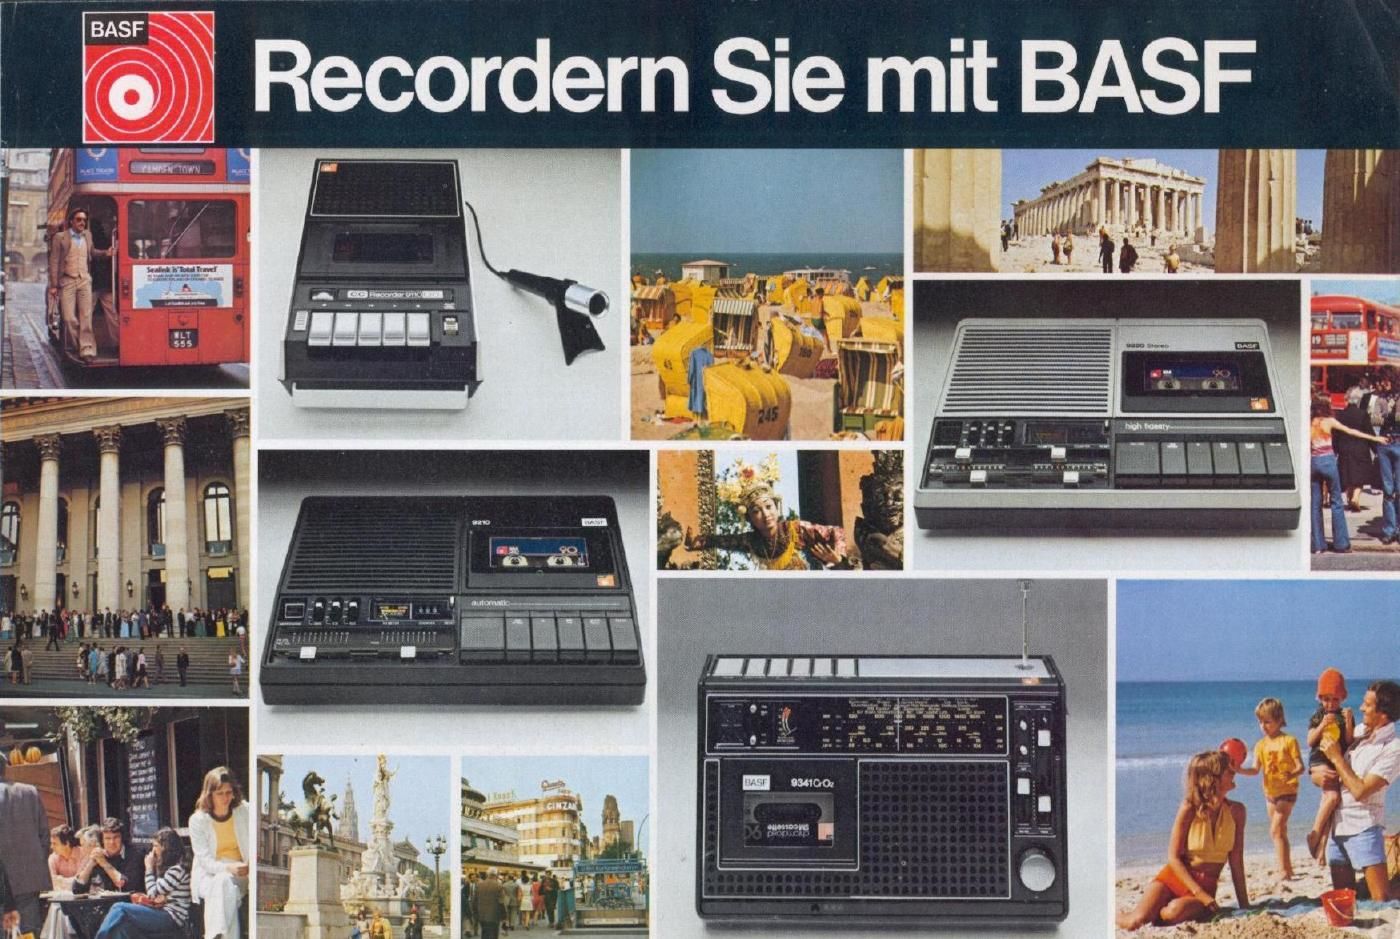 BASF Recorder Programm